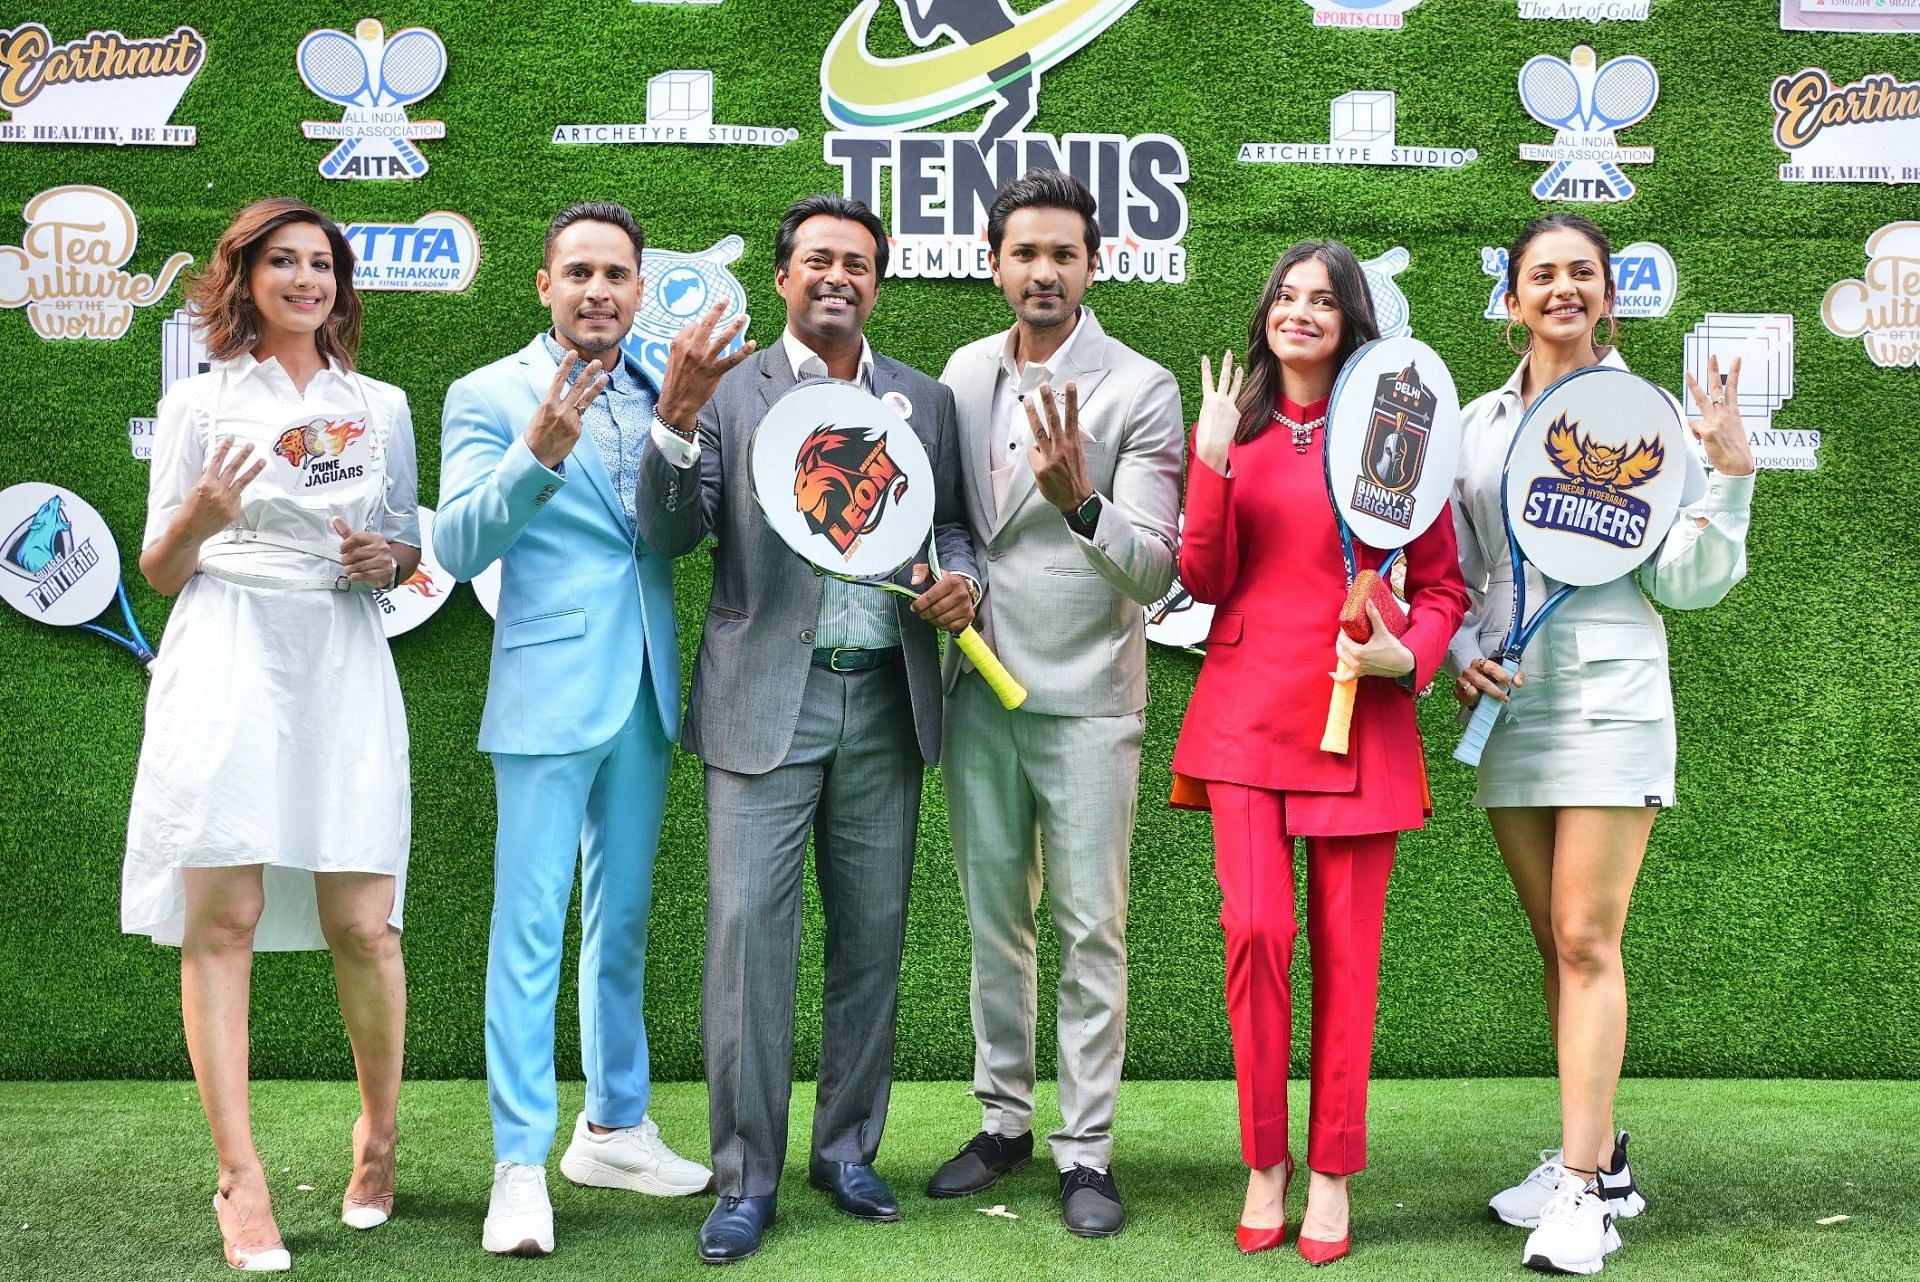 Tennis Premier League Co-Founders Kunal Thakkur and Mrunal Jain alongside the League